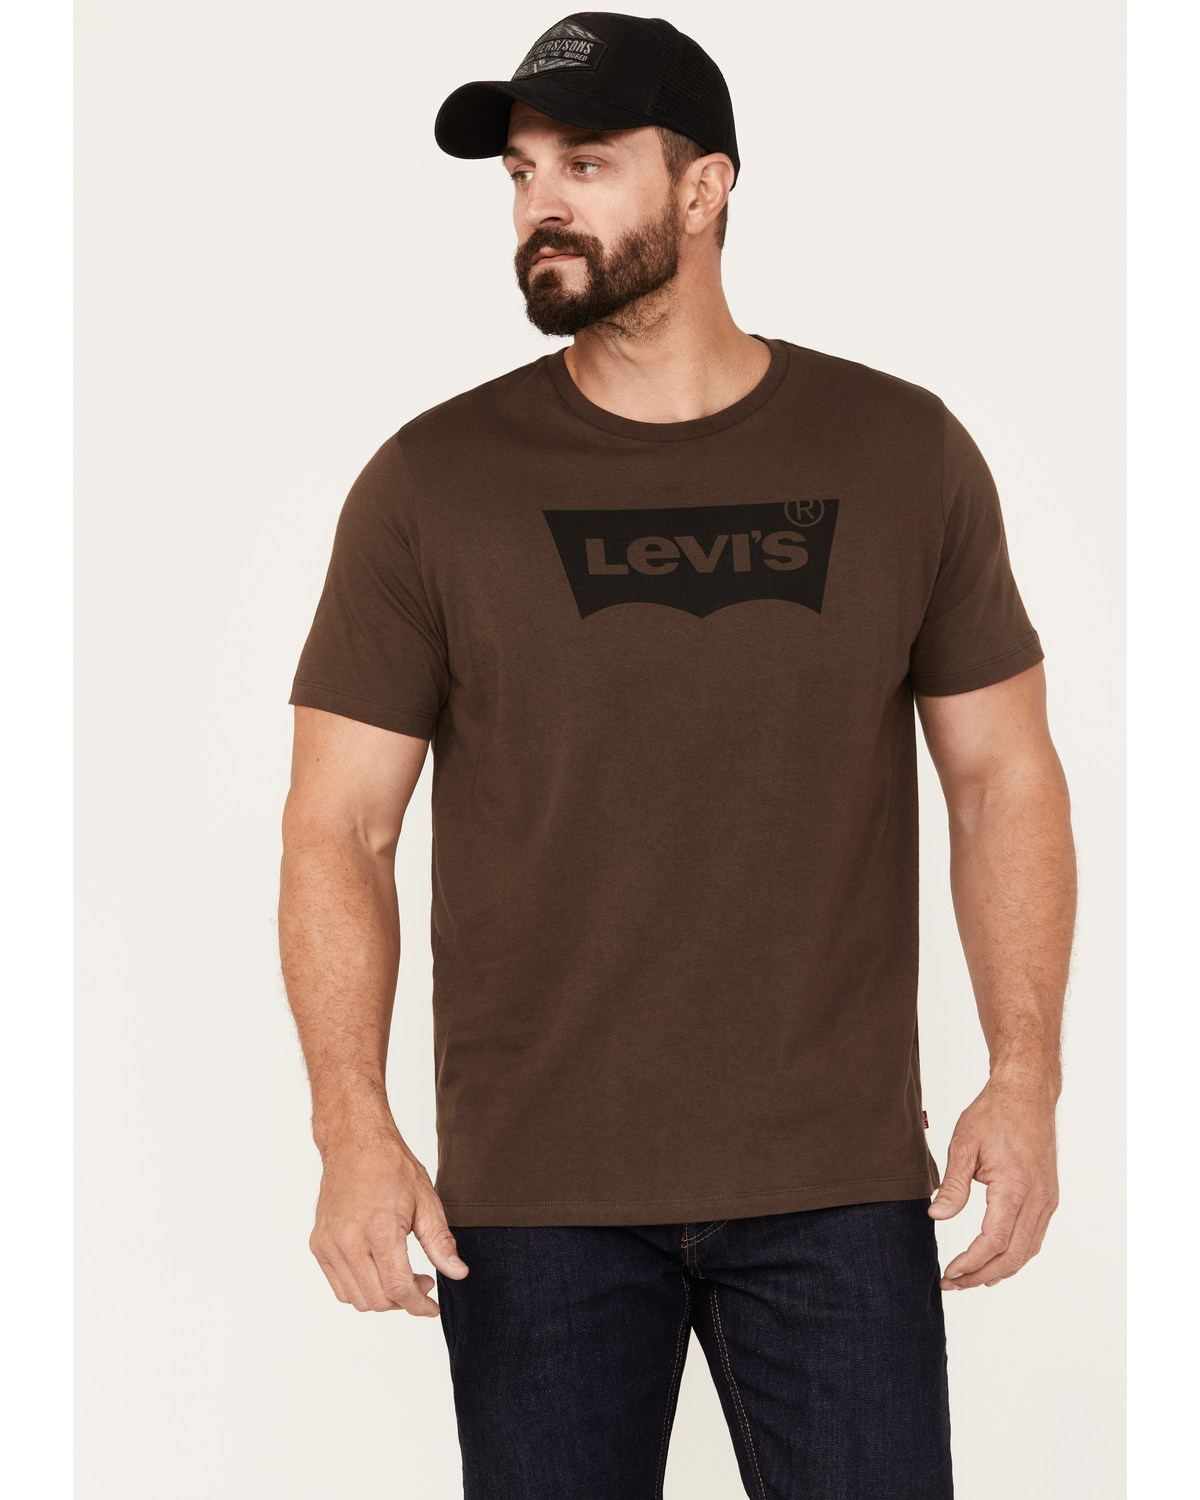 Levi's Men's Logo Graphic Short Sleeve T-Shirt